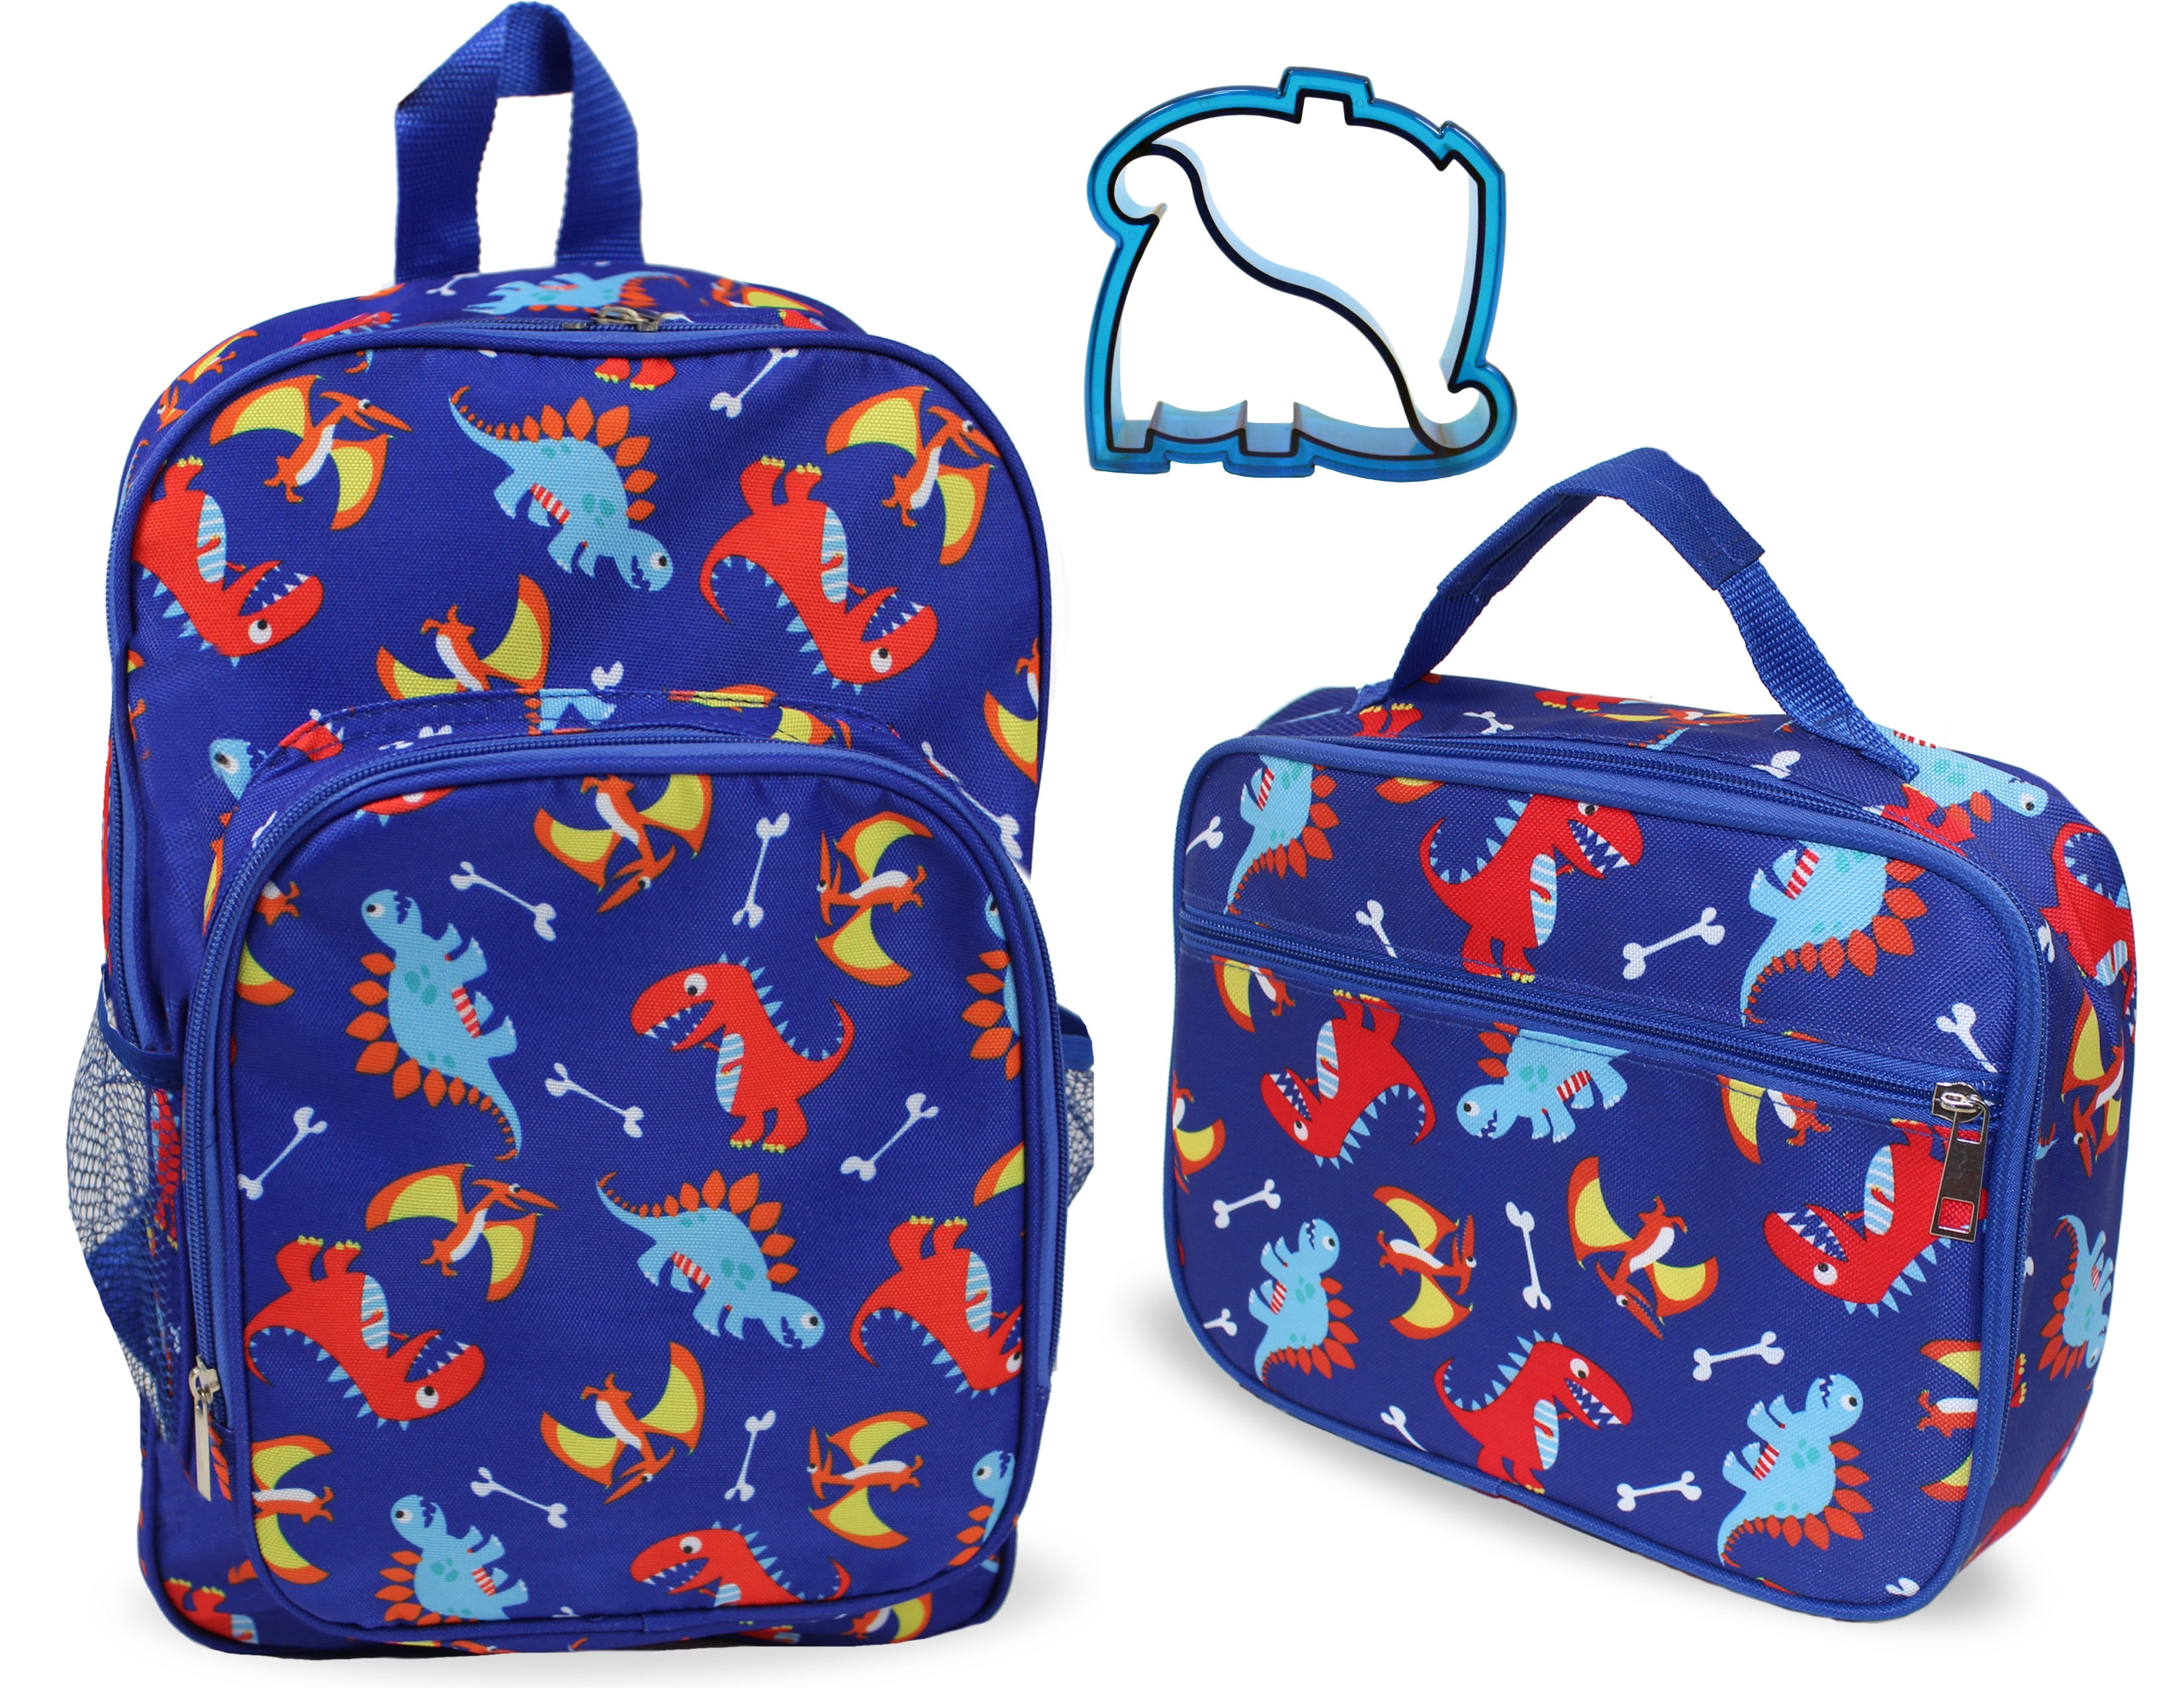 Cool 3D Printing Dinasaur School Backpack for Boys Girls School Book Bags Lunch Bag Pen Bag 